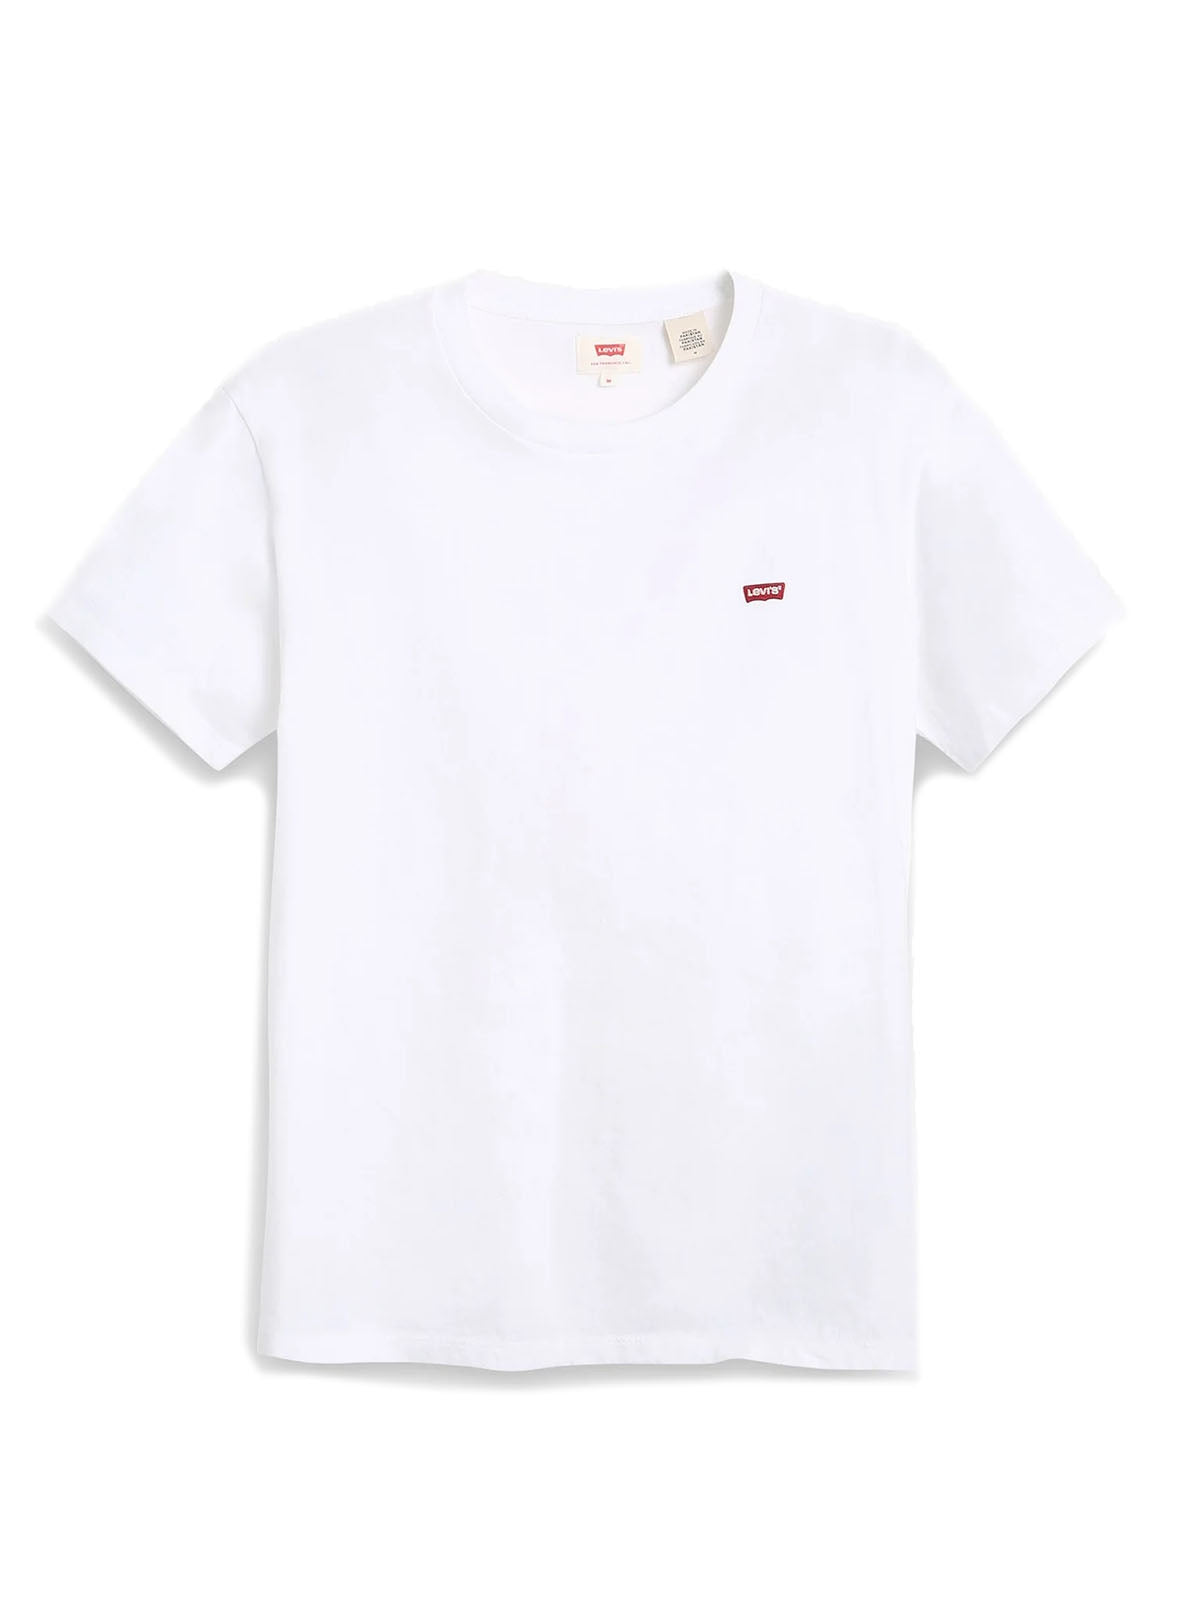 T-shirt Uomo Levi's - T-Shirt Housemark Original - Bianco